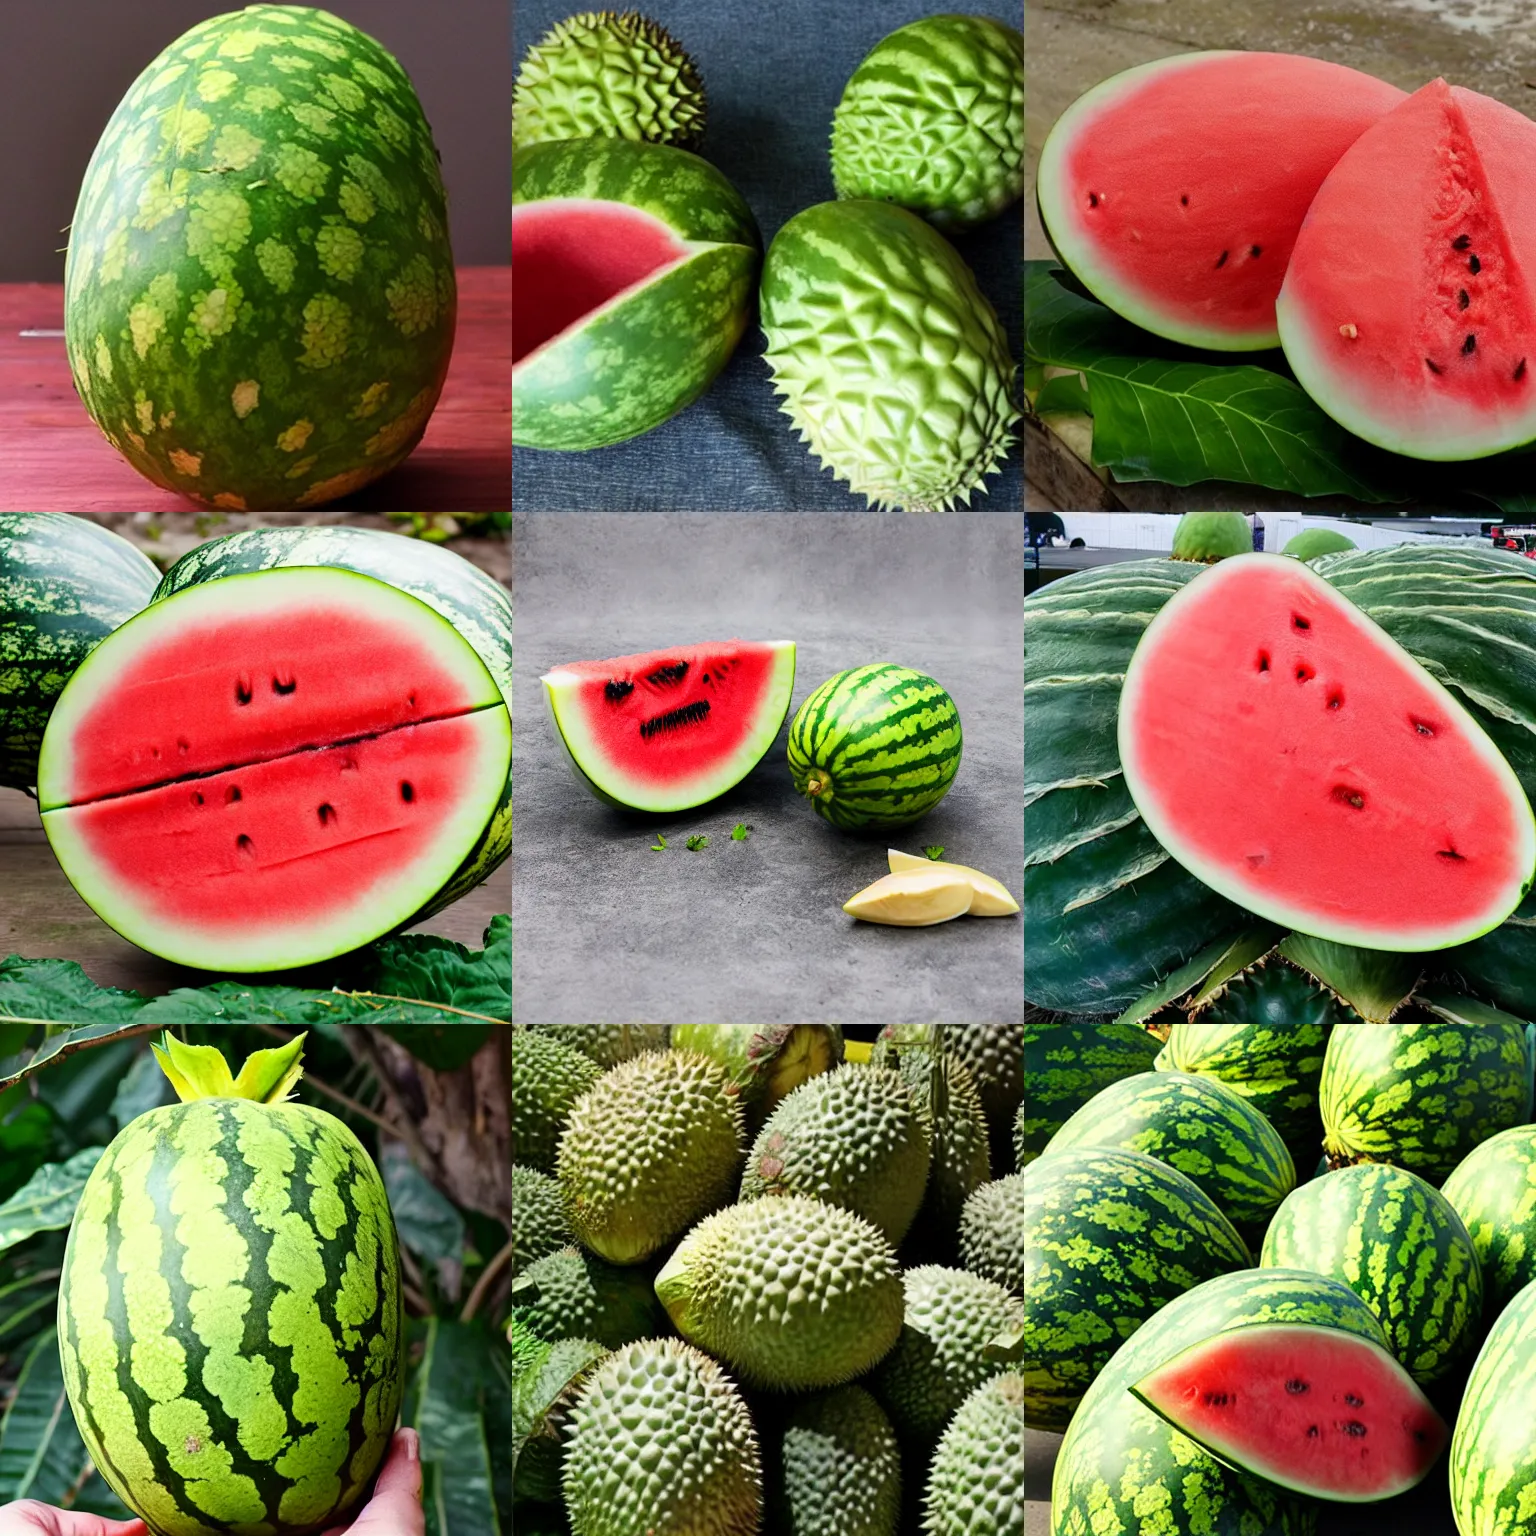 Prompt: watermelon durian hybrid